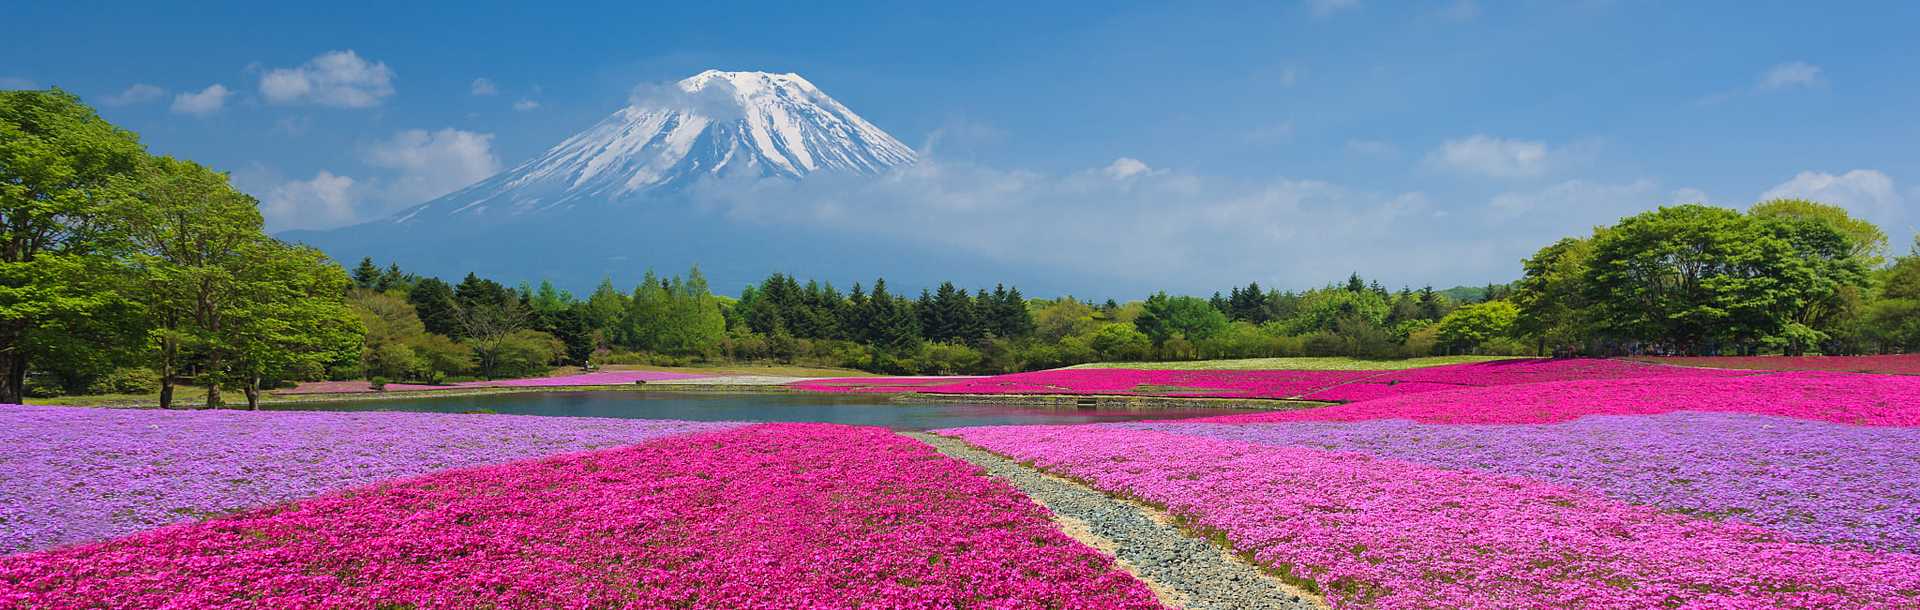 Mount Fuji with field of pink moss at Shibazakura festival in Yamanashi, Japan.